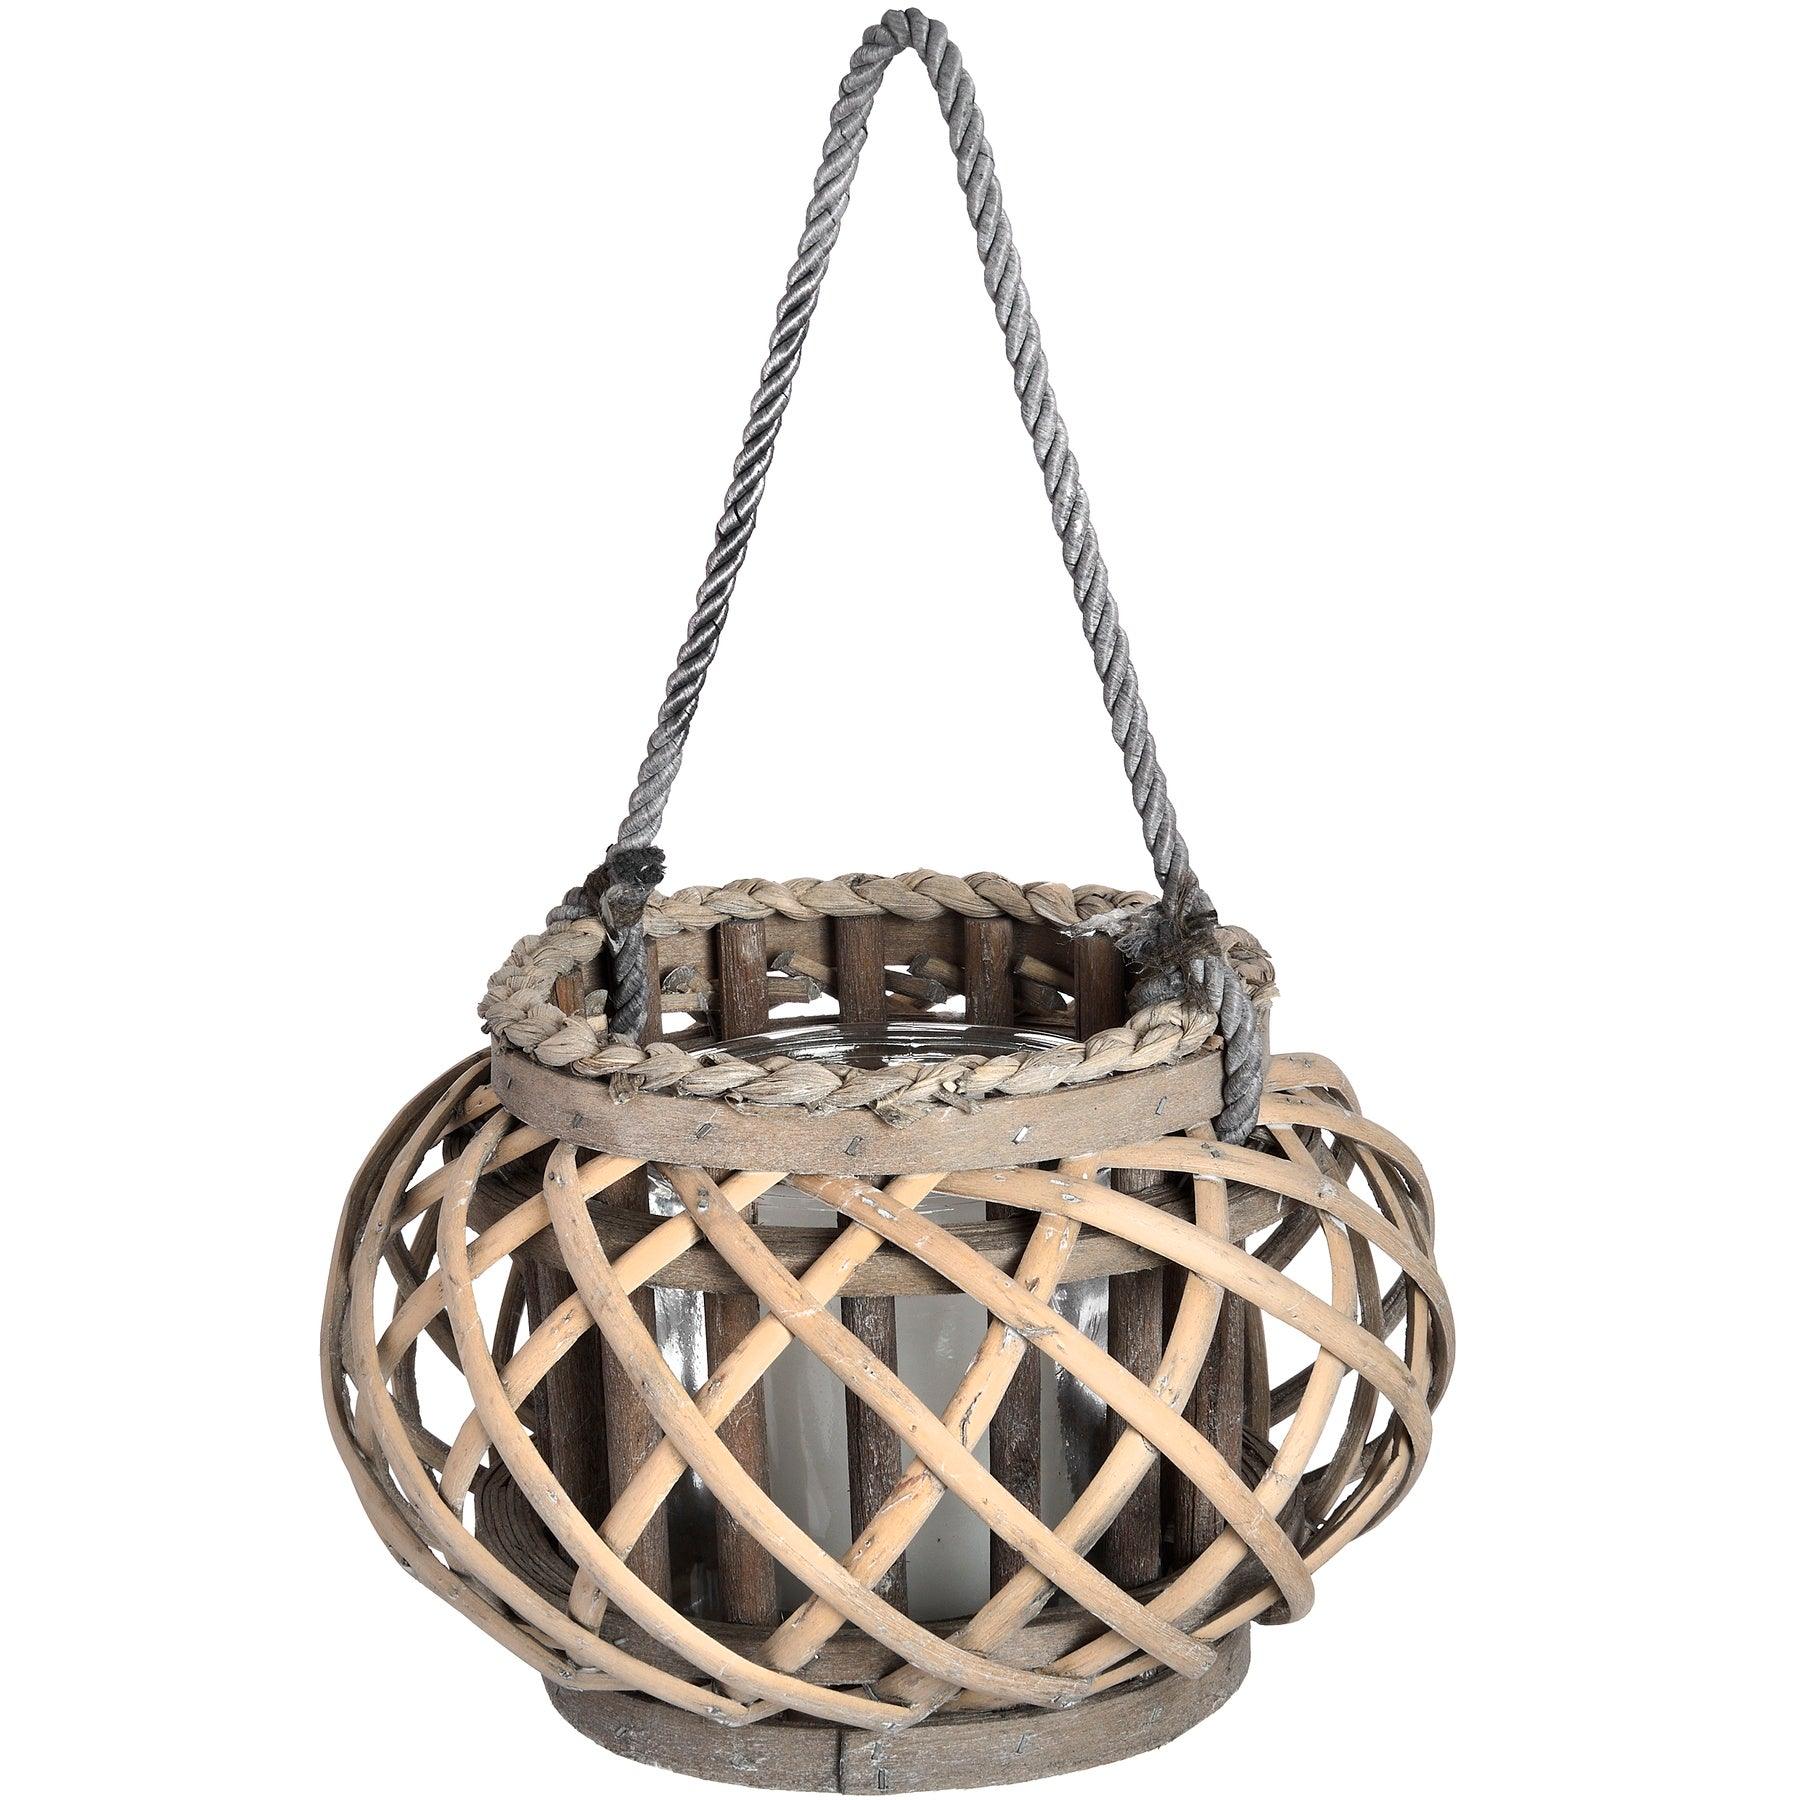 View Small Wicker Basket Lantern information